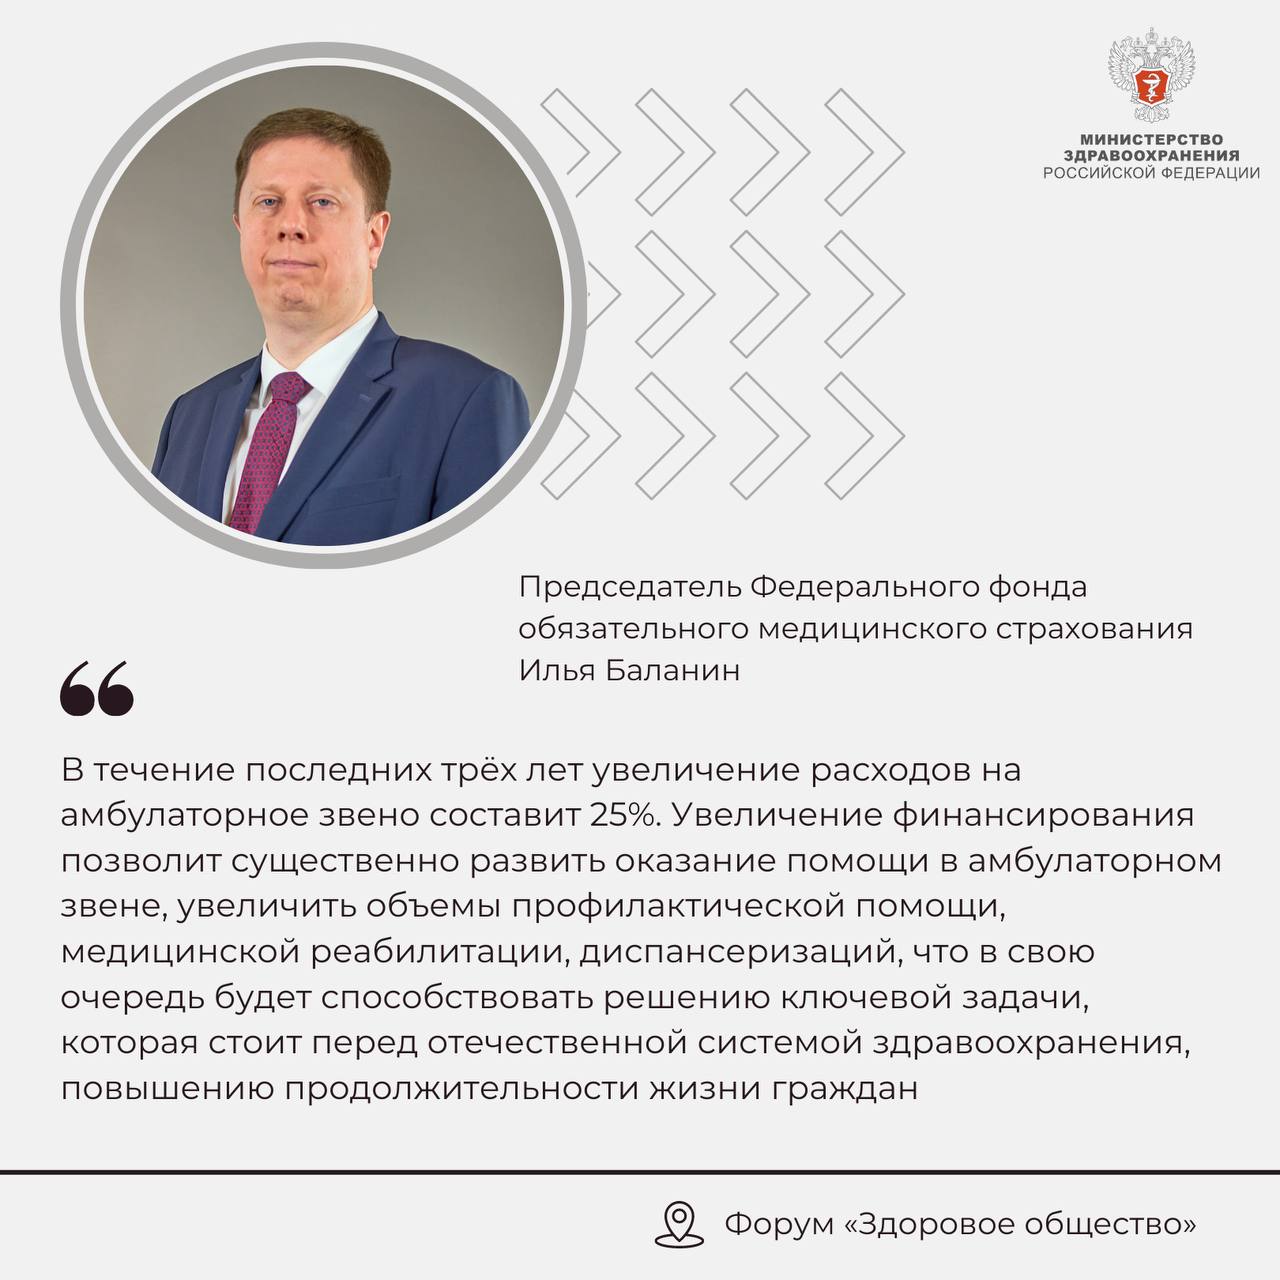 Более 1 трлн рублей заложено на финансирование амбулаторного звена в 2023 году